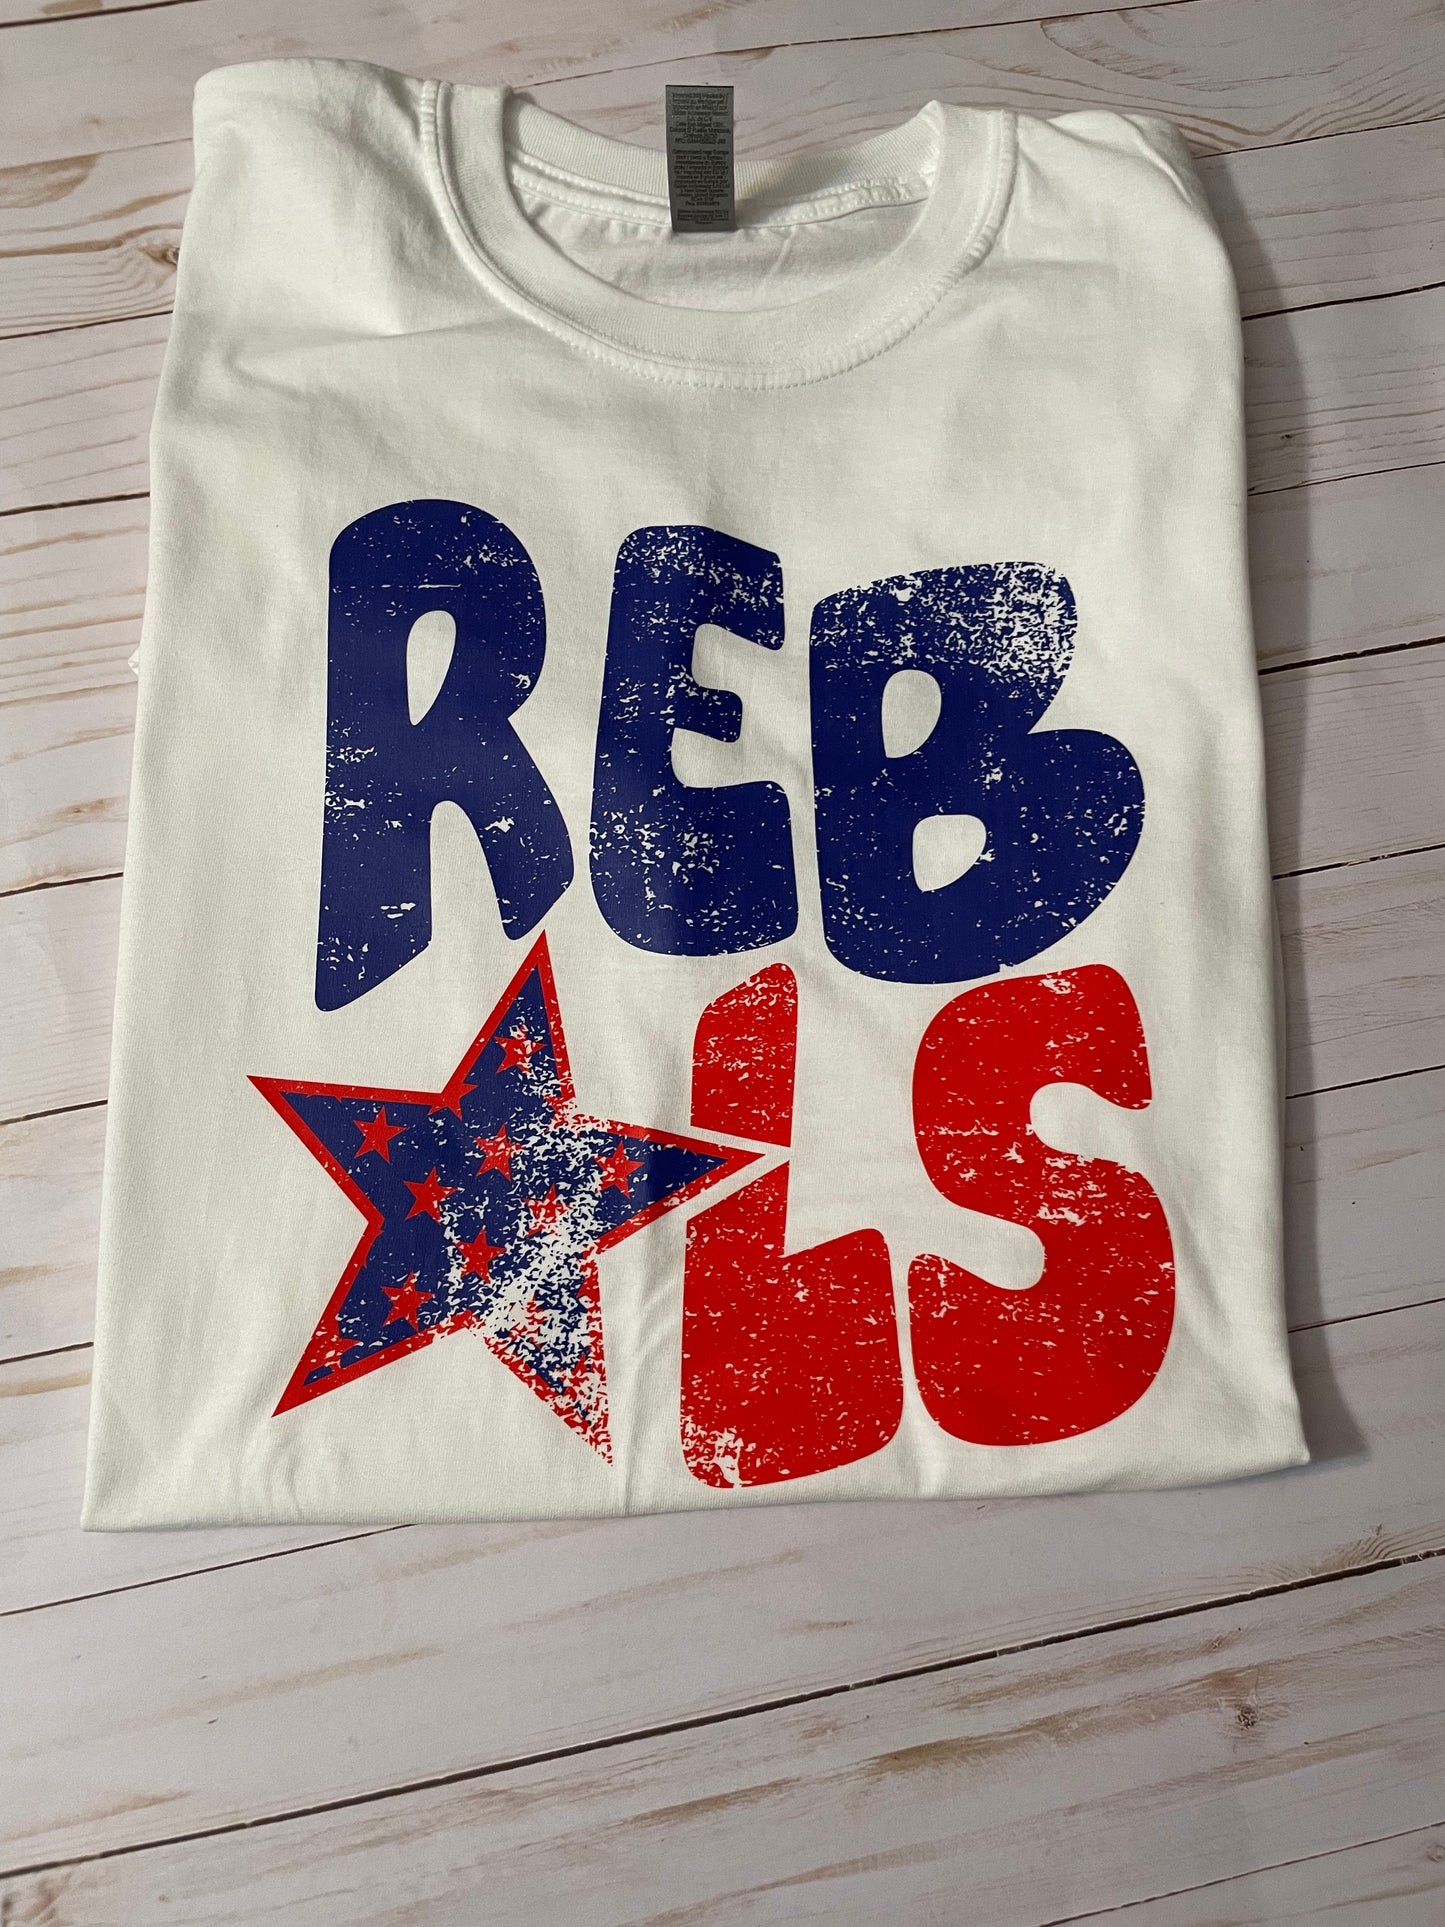 Rebels distressed font tshirt